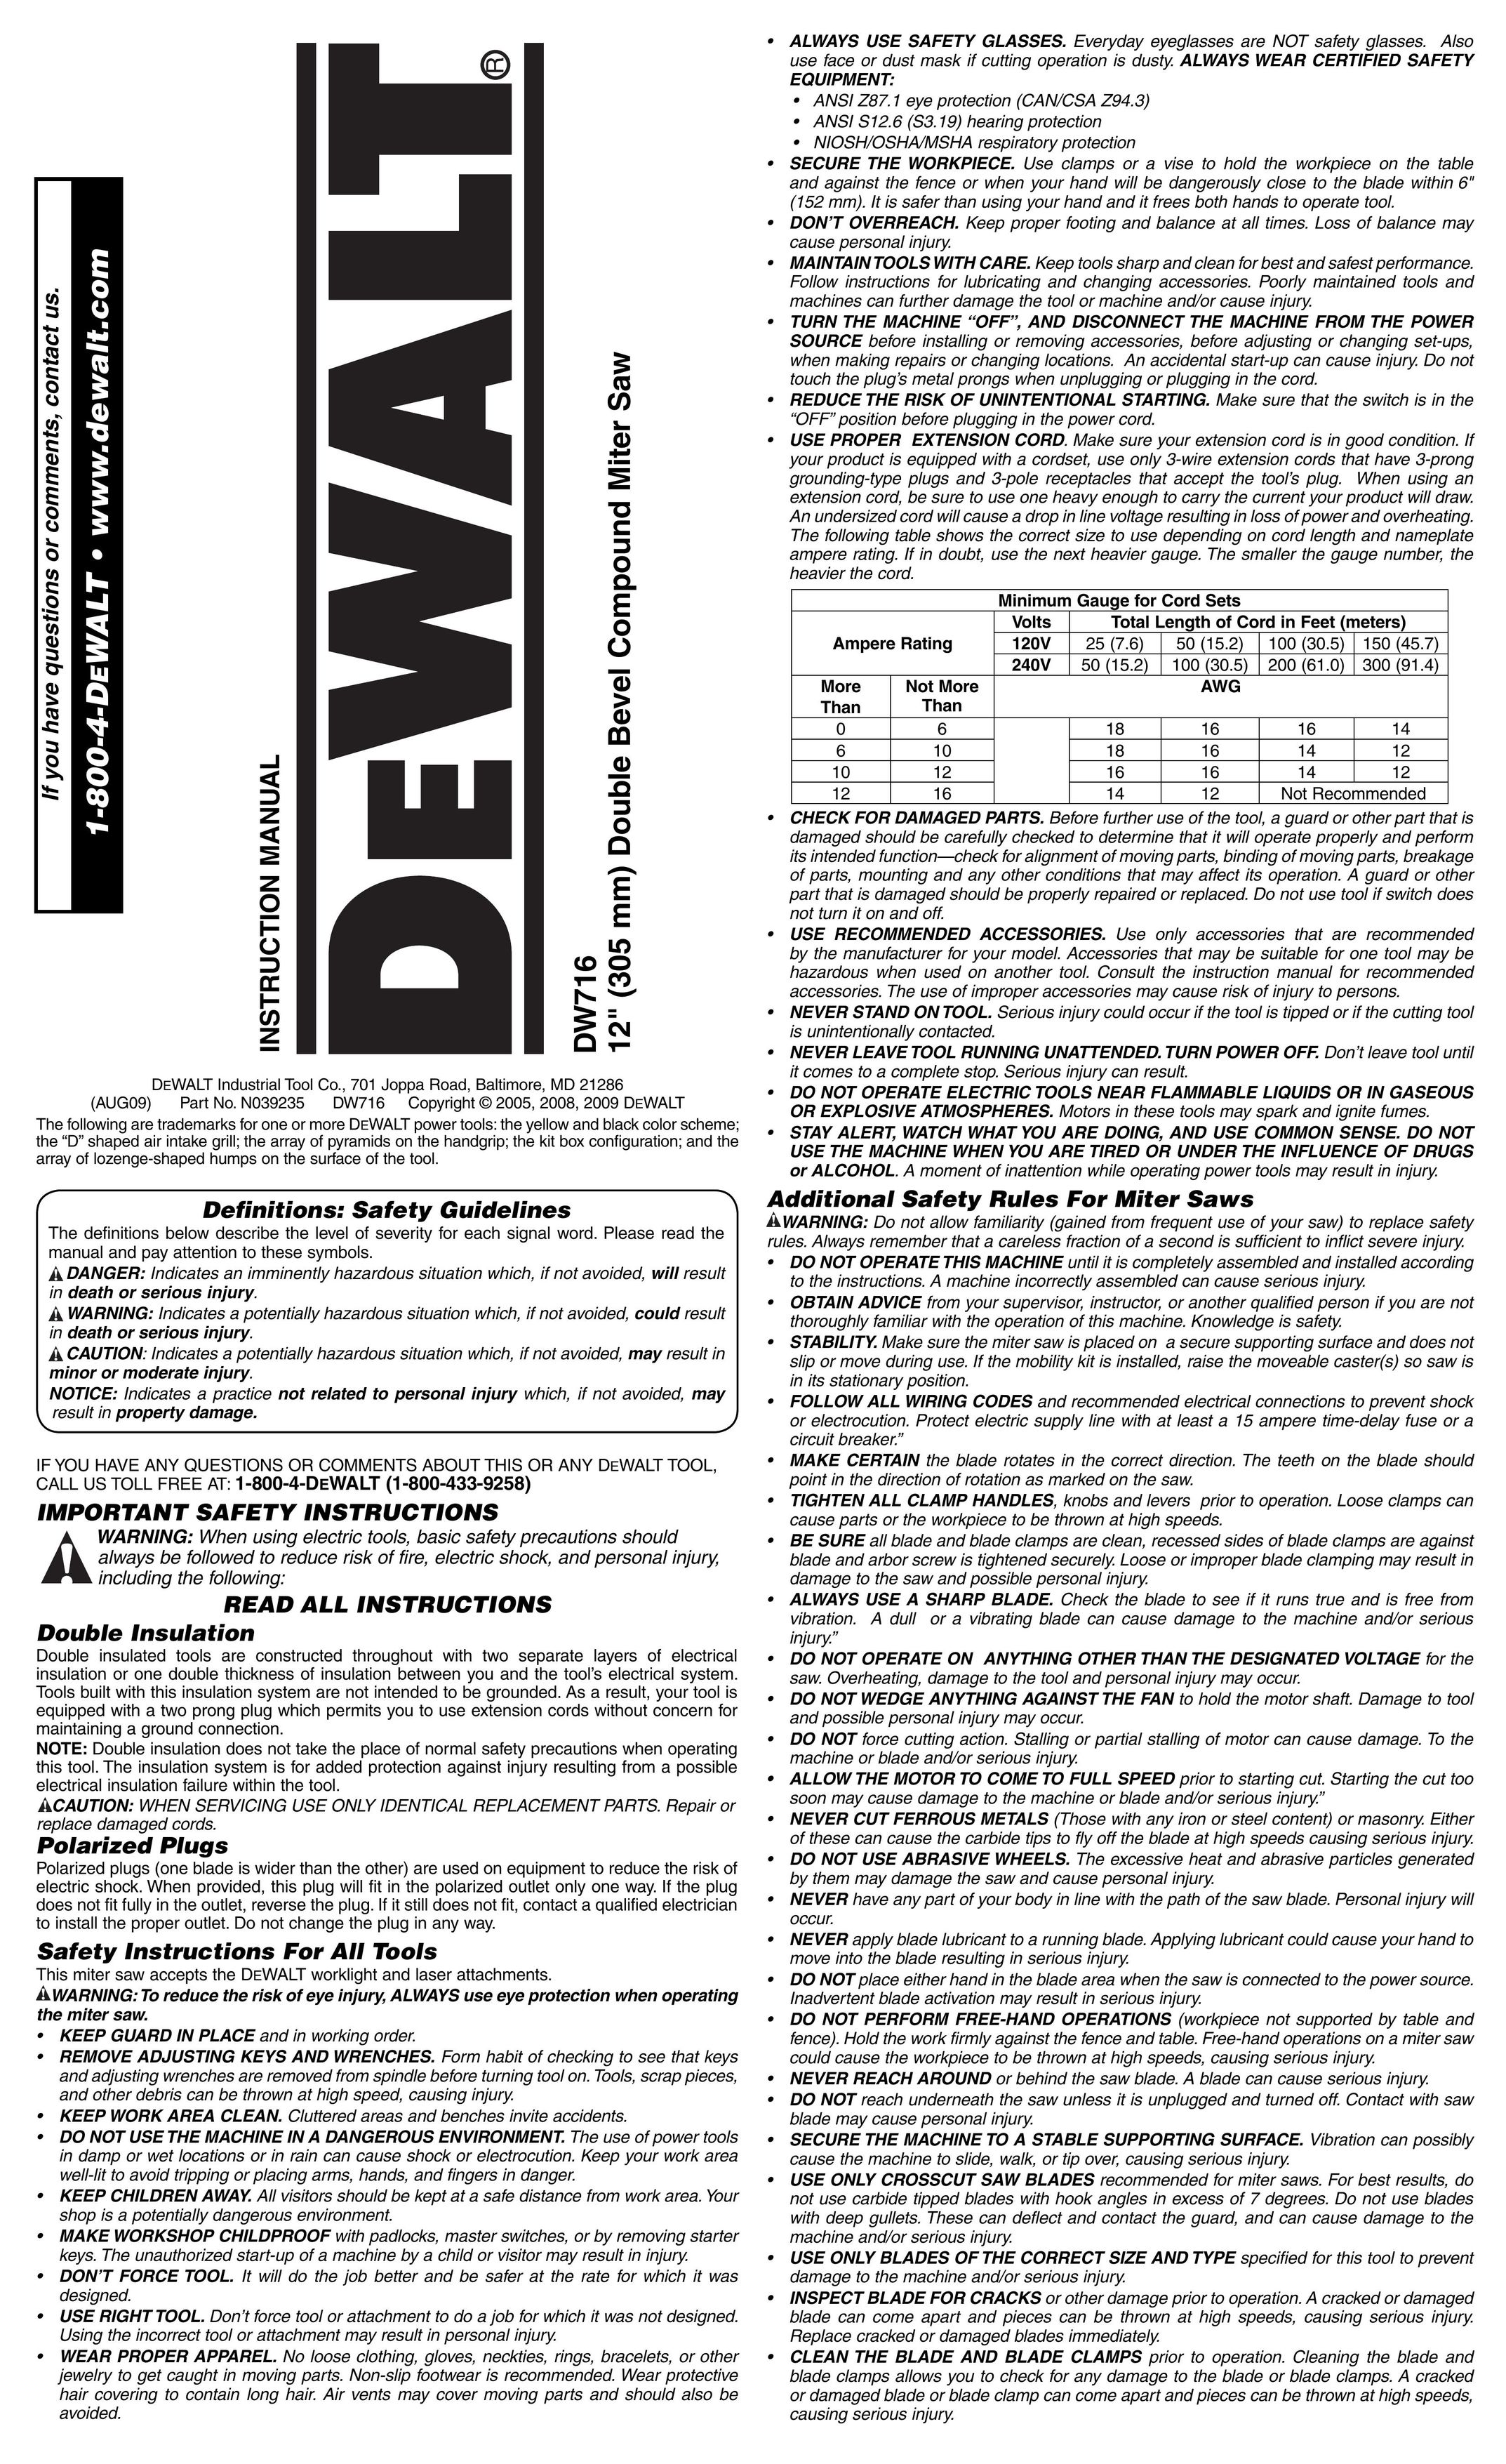 DeWalt DW716 Cordless Saw User Manual